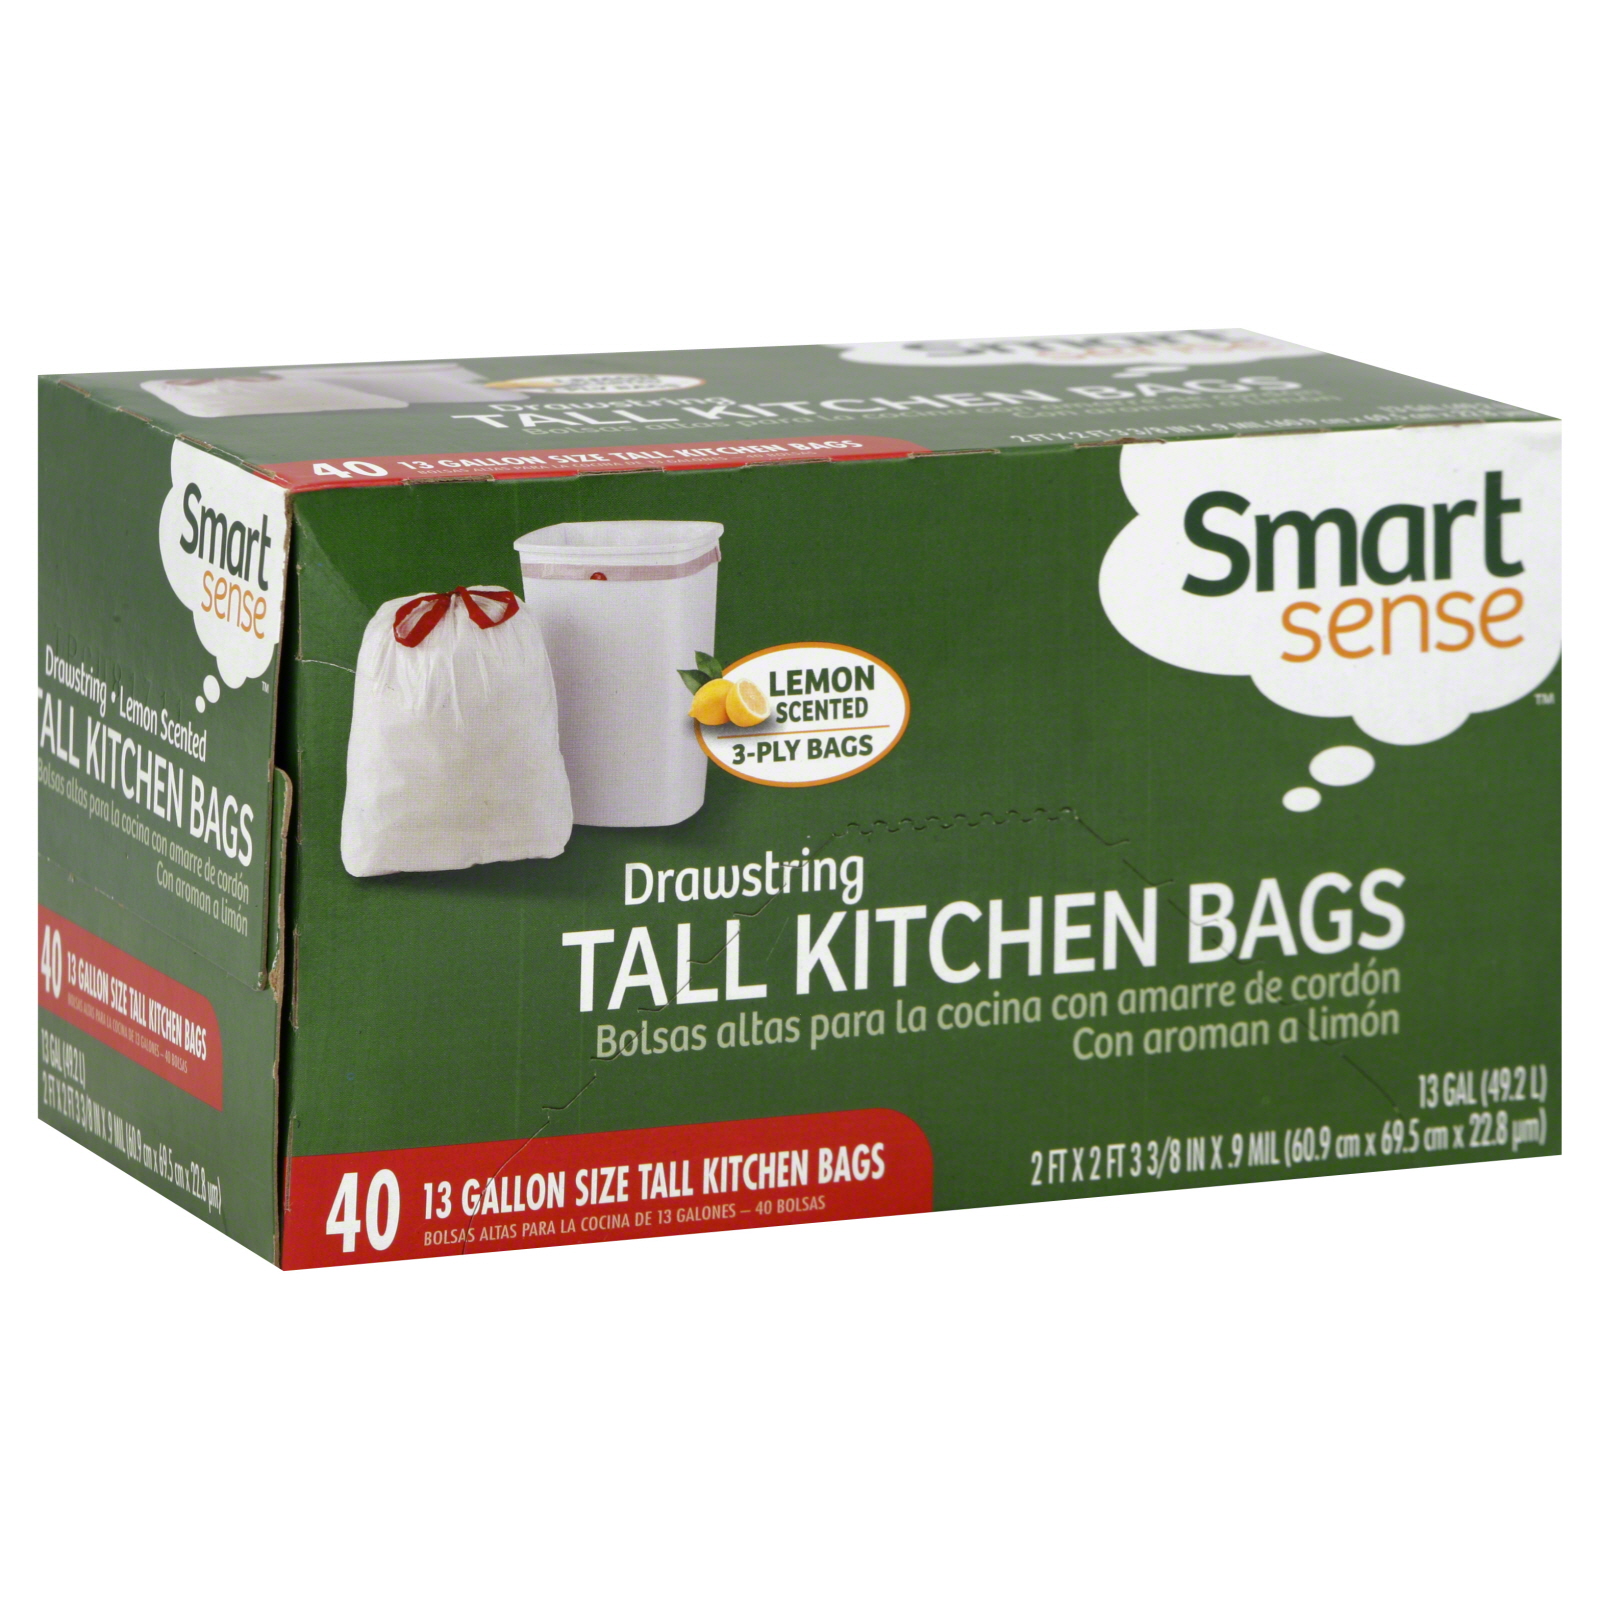 Smart Sense Tall Kitchen Bags, Drawstring, 3-Ply, 13 Gallon, Lemon Scented, 40 bags